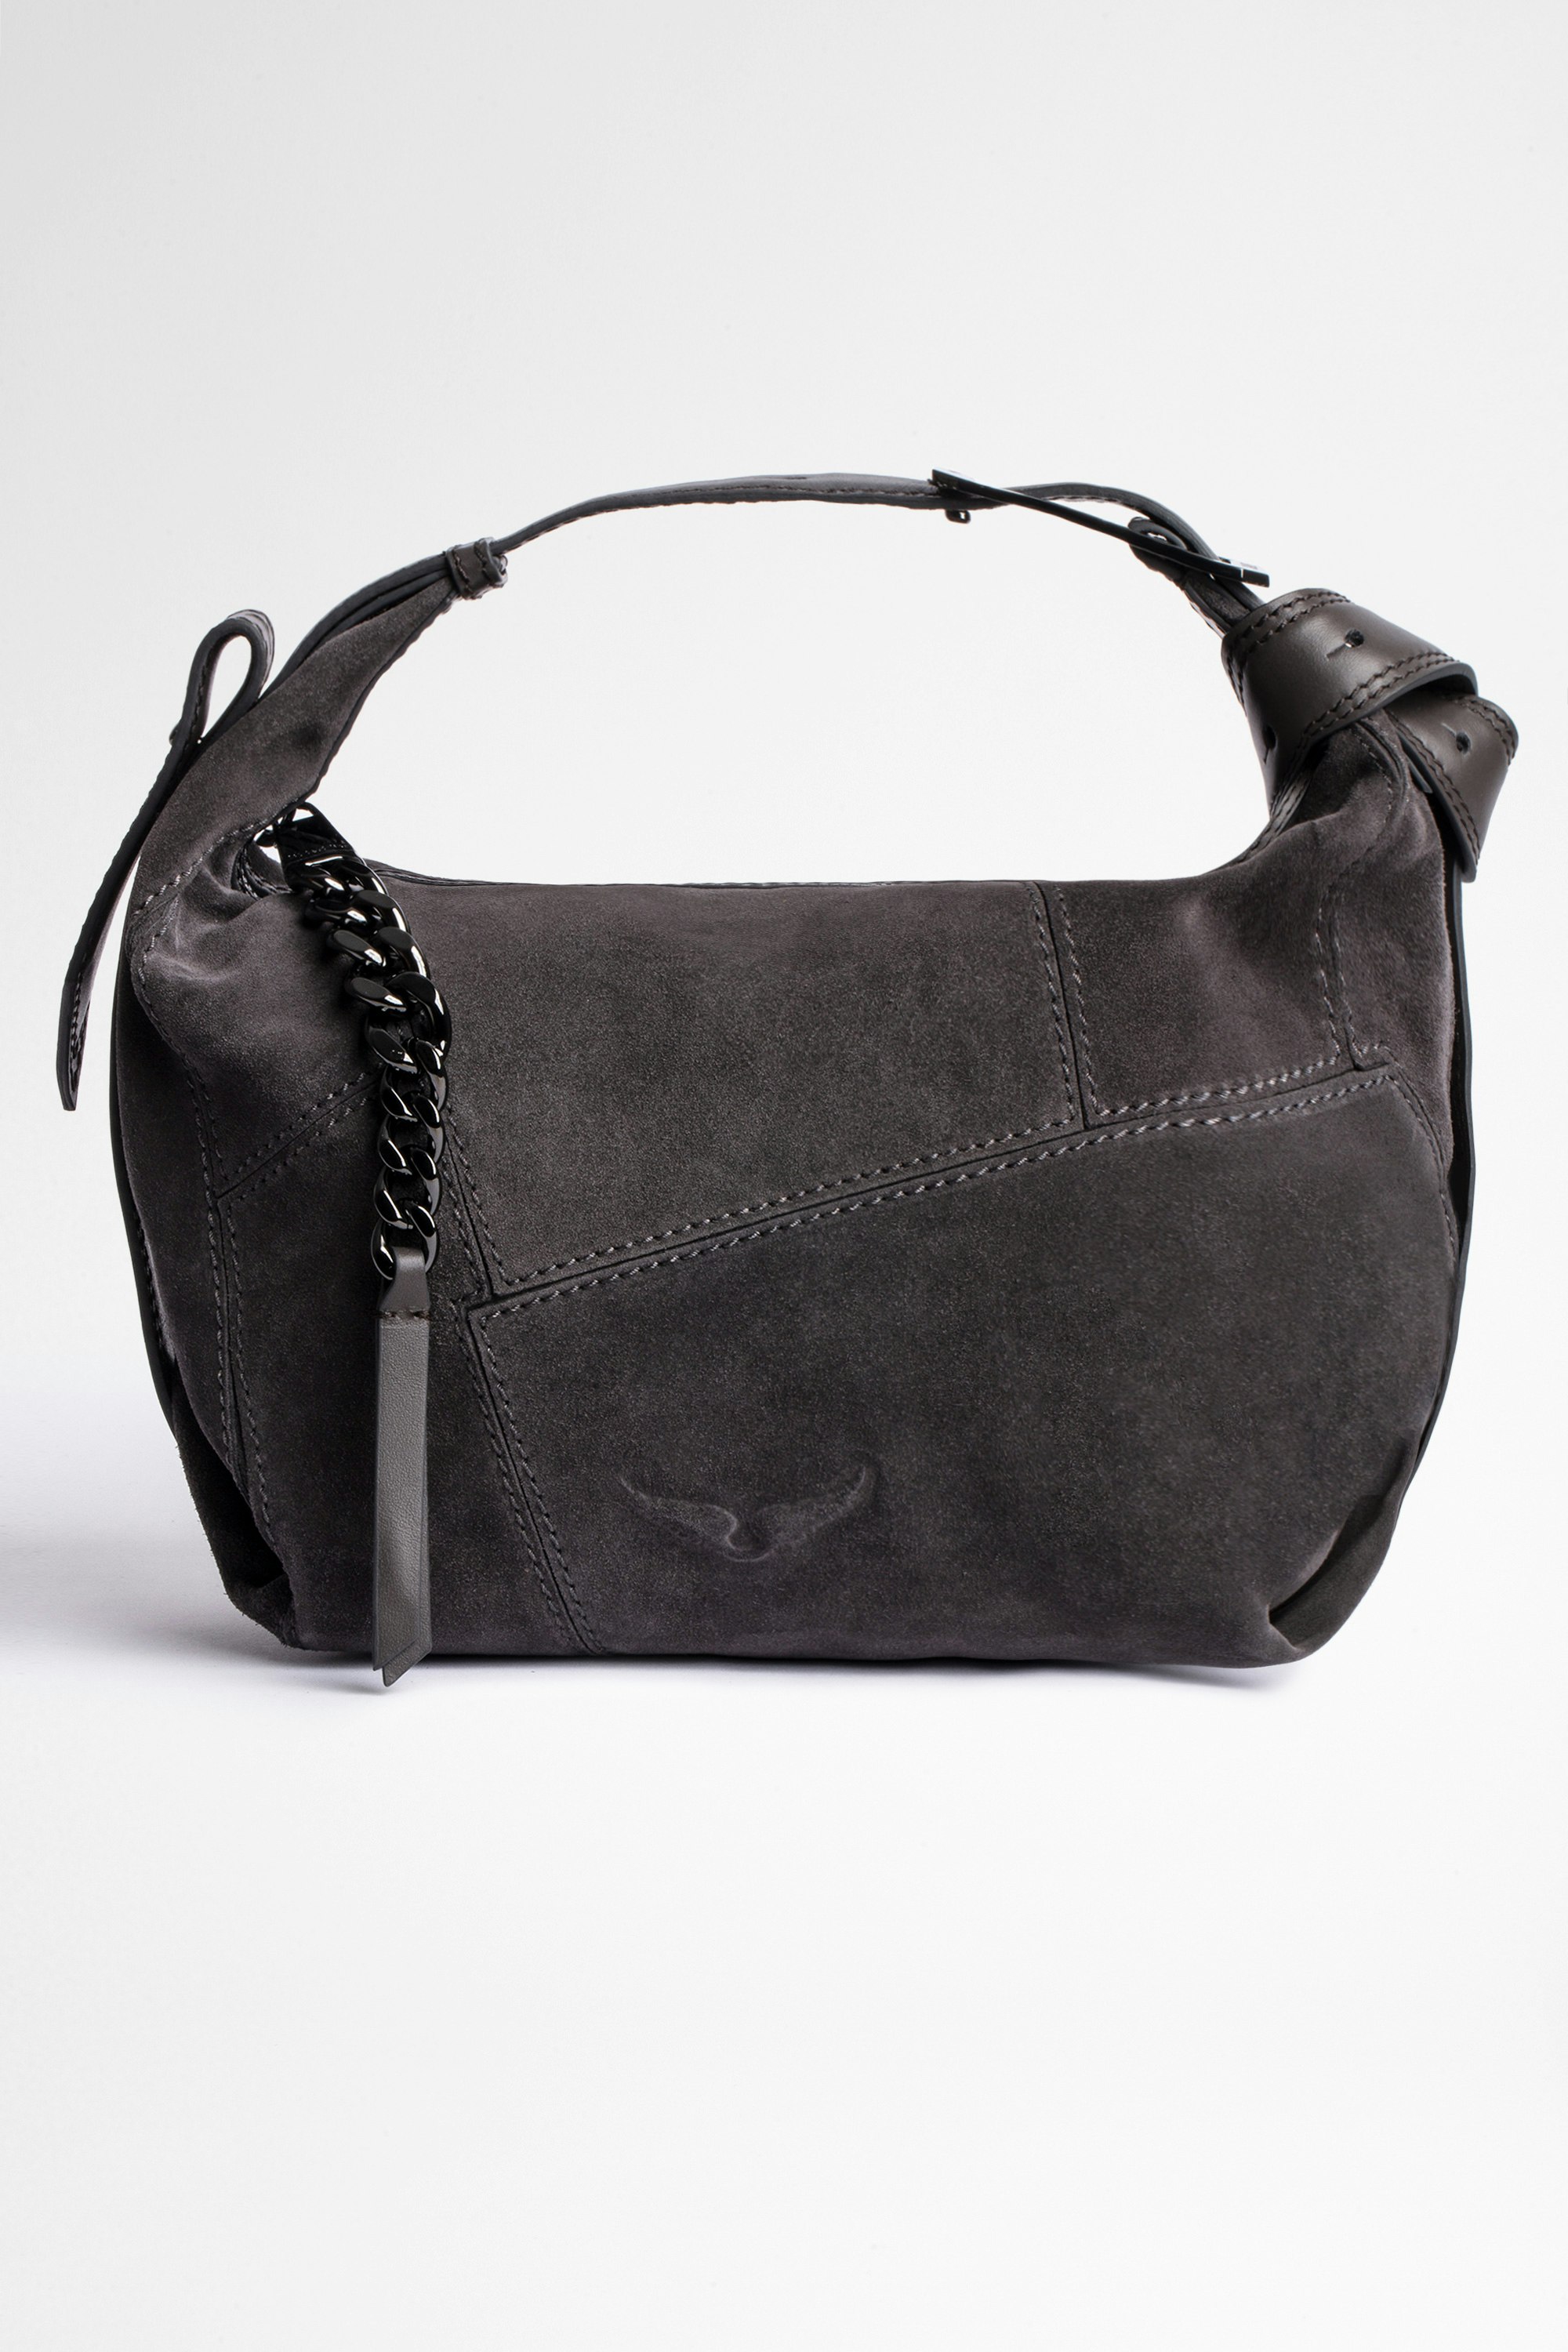 Le Cecilia Suede Patchwork Bag Women's gray suede patchwork shoulder bag or crossbody bag